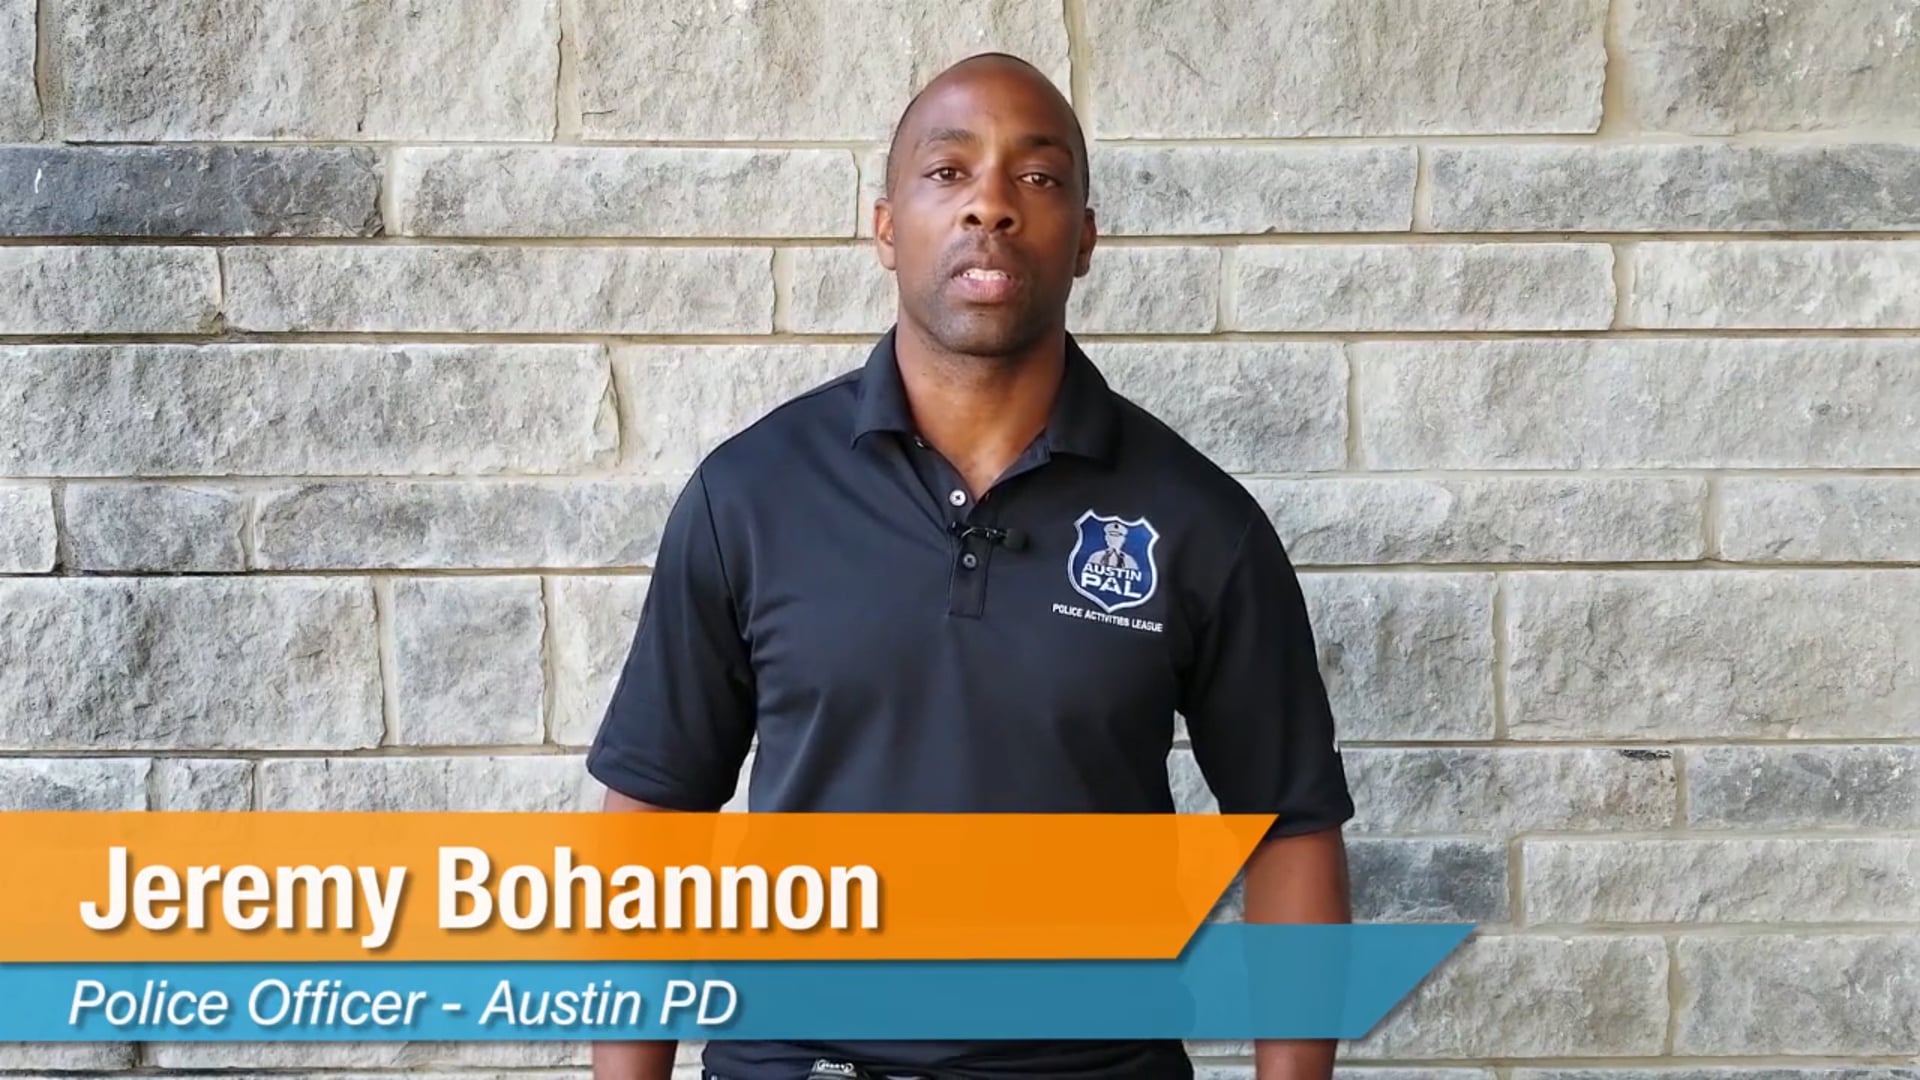 Tips for Success - Police Officer - Jeremy Bohannon